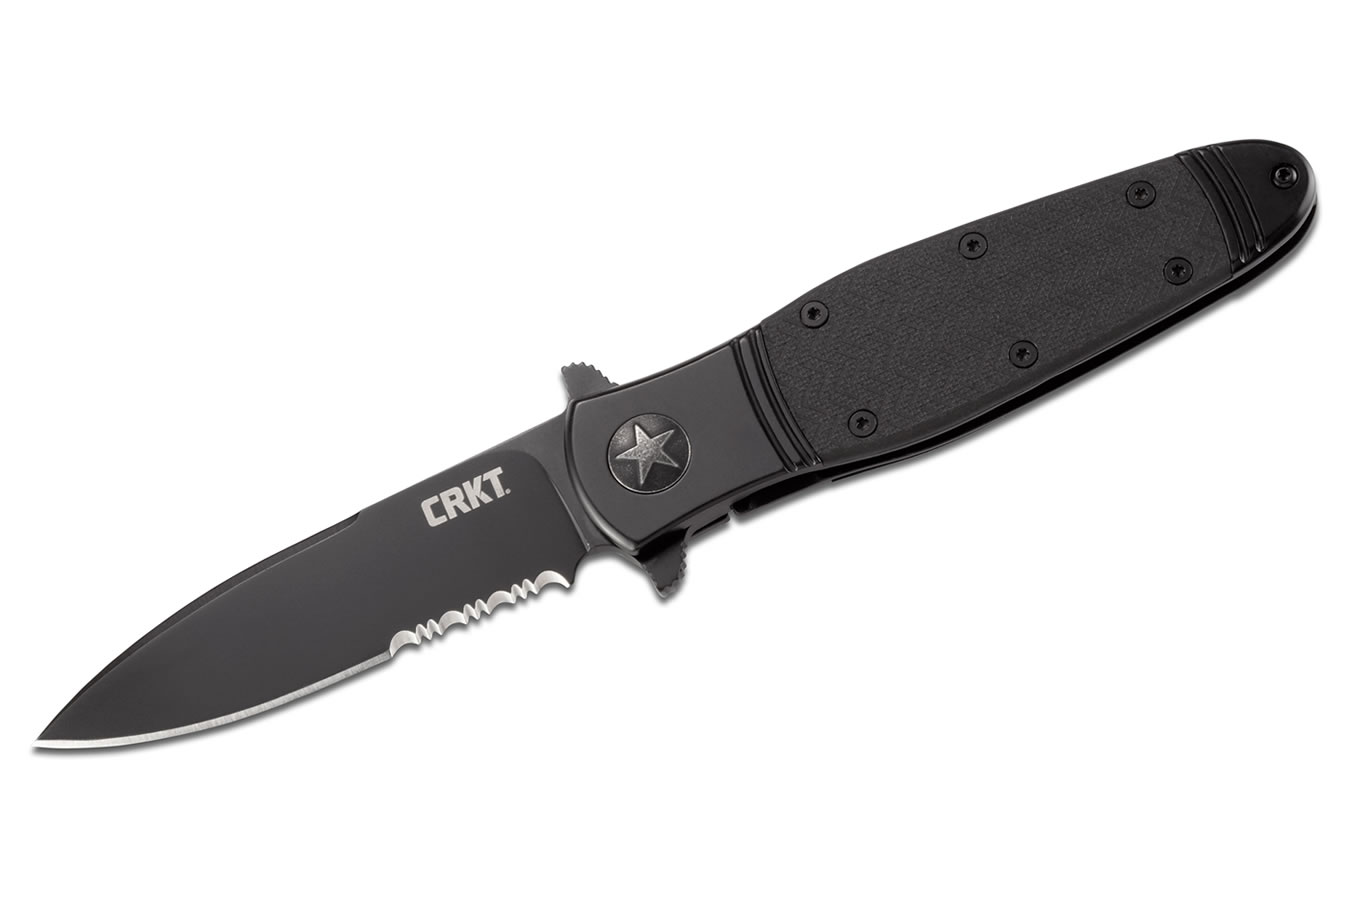 COLUMBIA RIVER KNIFE BOMBASTIC BLACK SPEAR POINT FOLDING KNIFE